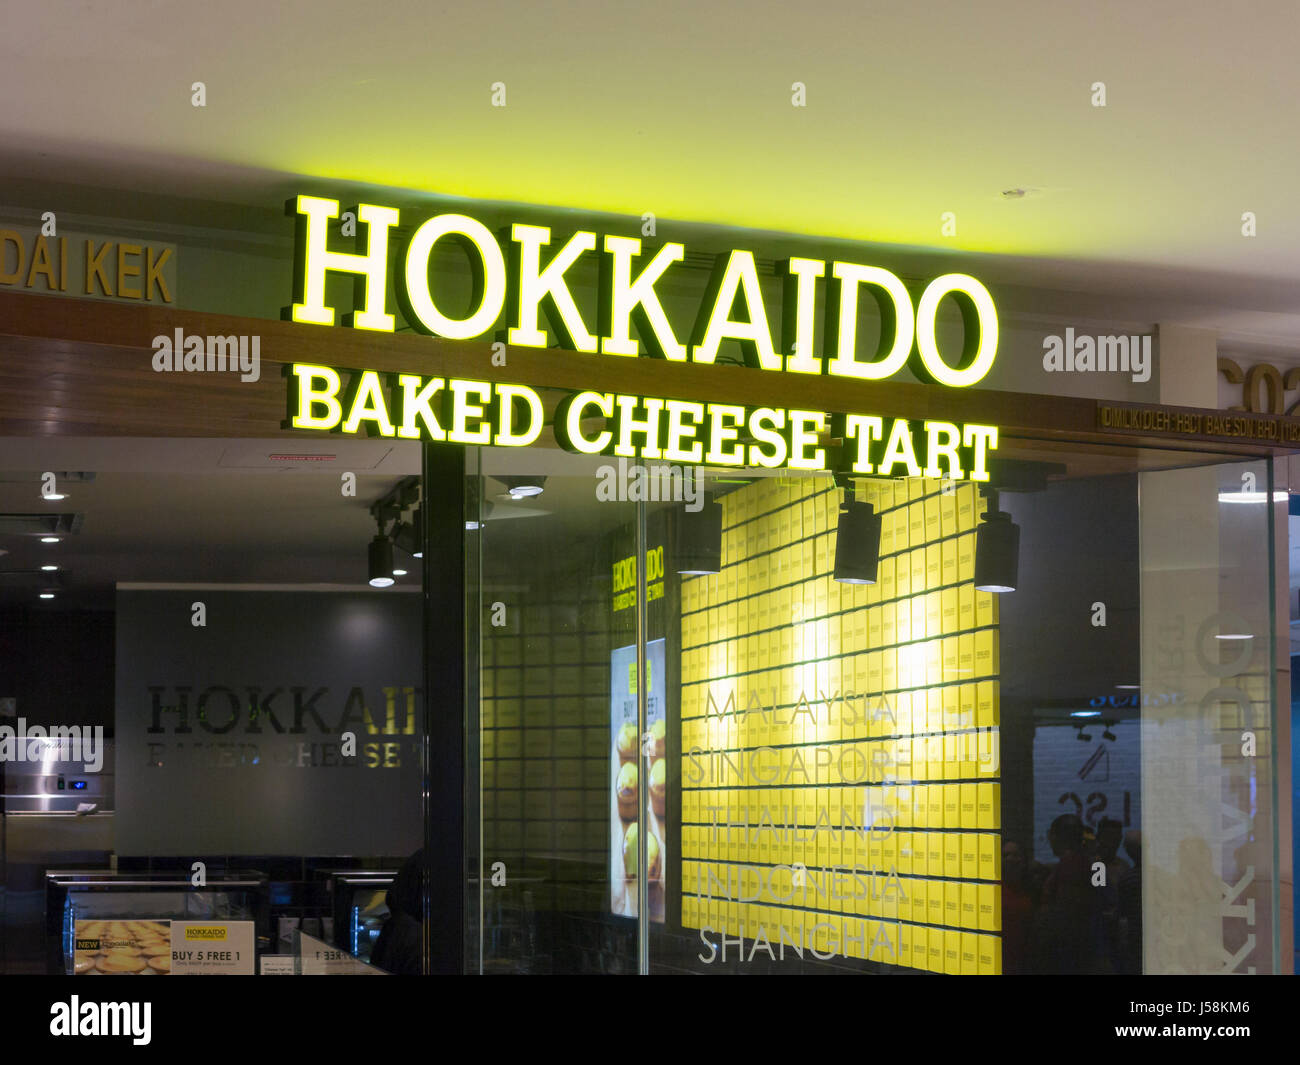 Hokkaido baked cheese tart shop, Kuala Lumpur, Malaysia Stock Photo